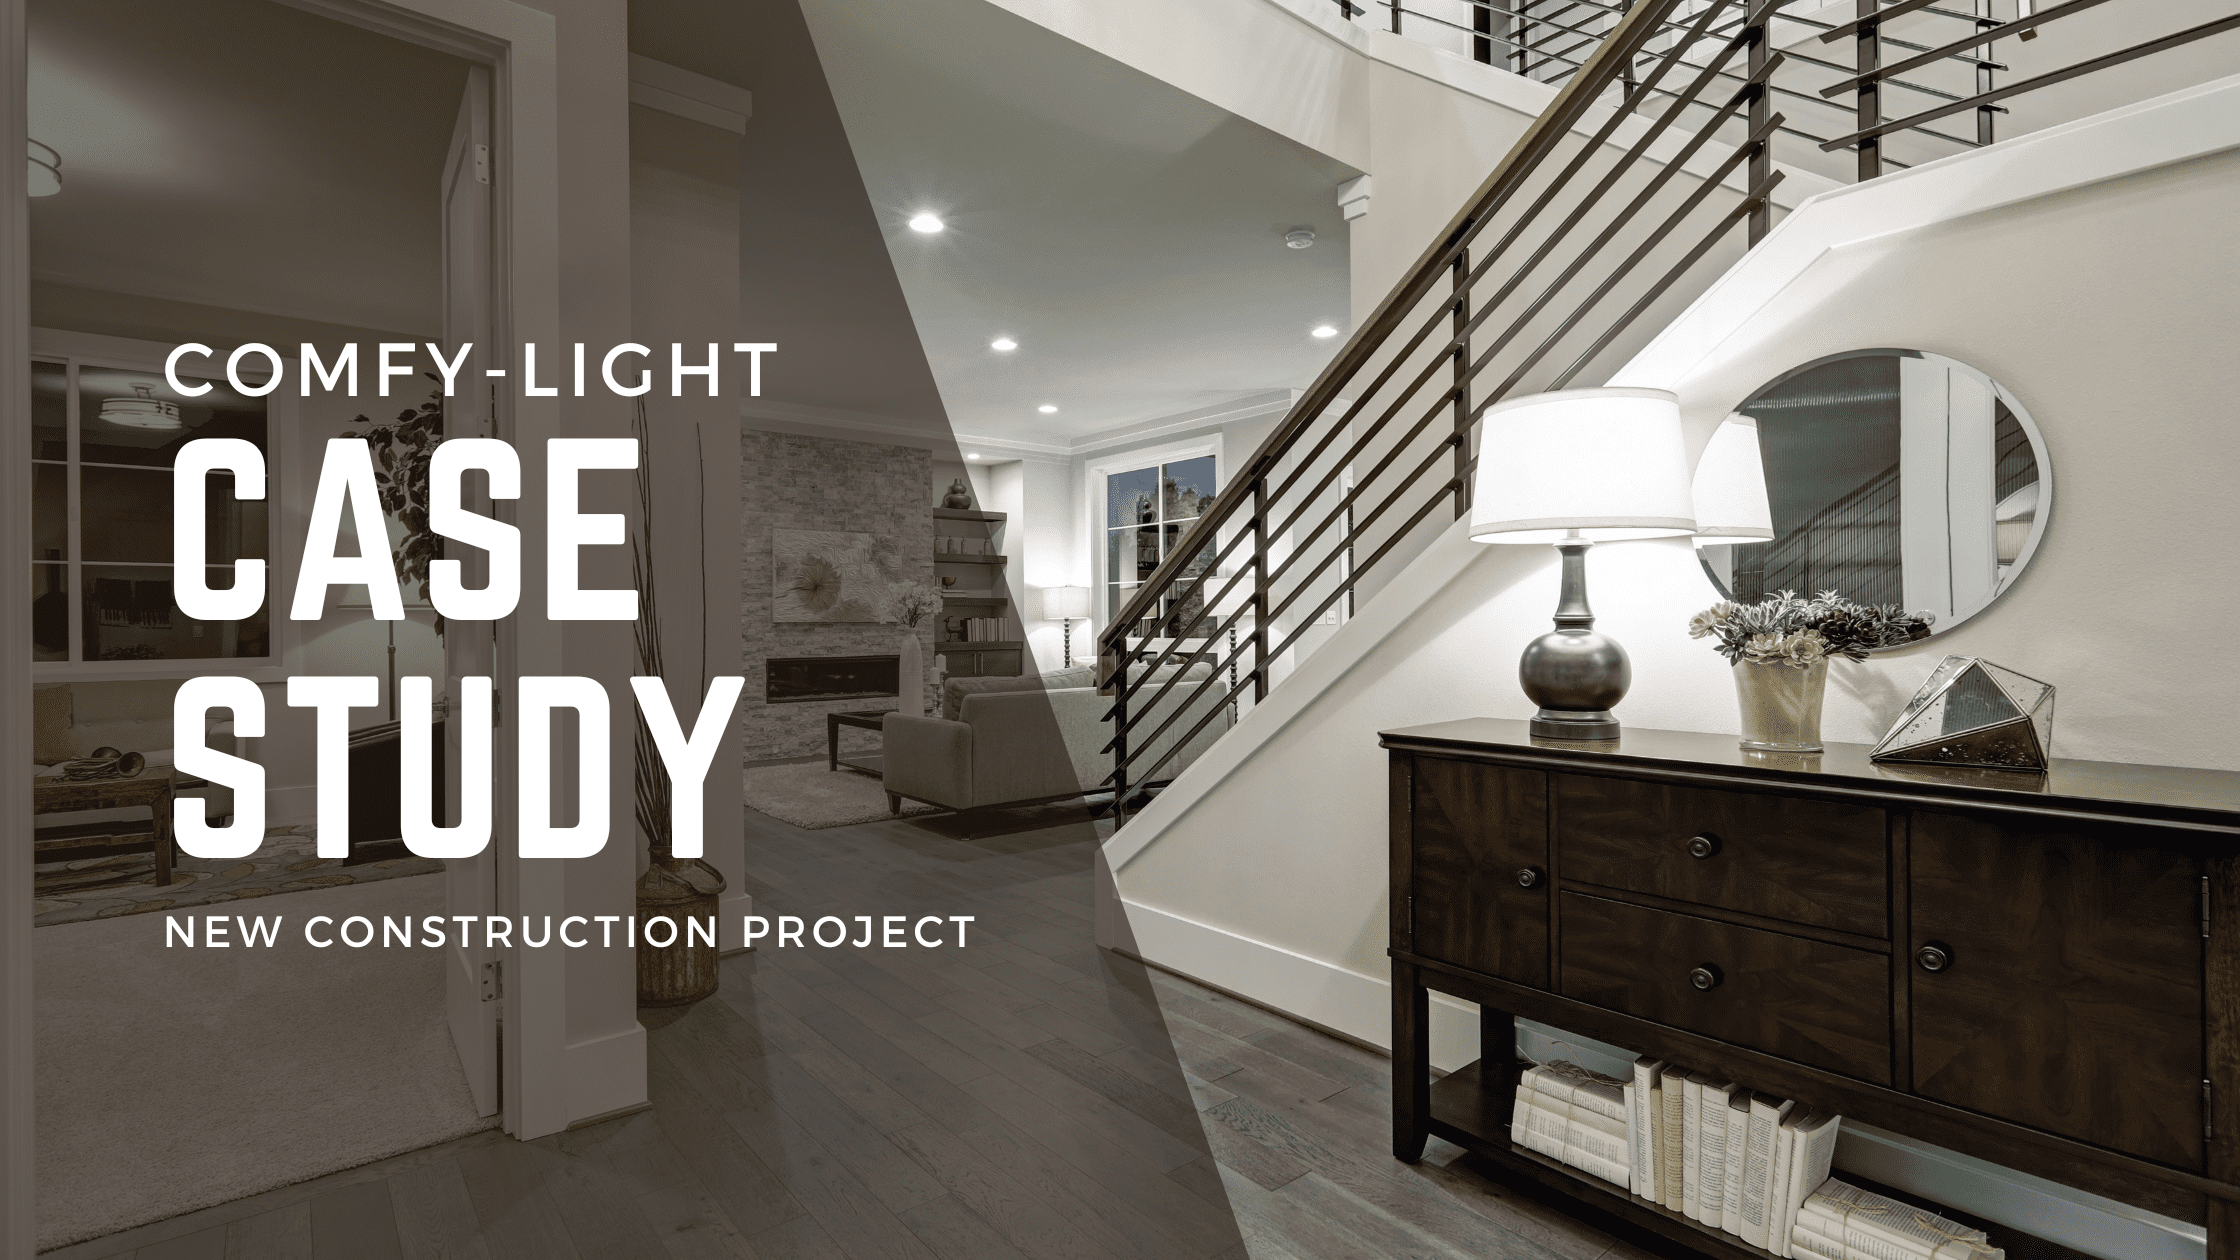 Homebuilder Case Study with Comfy-Light